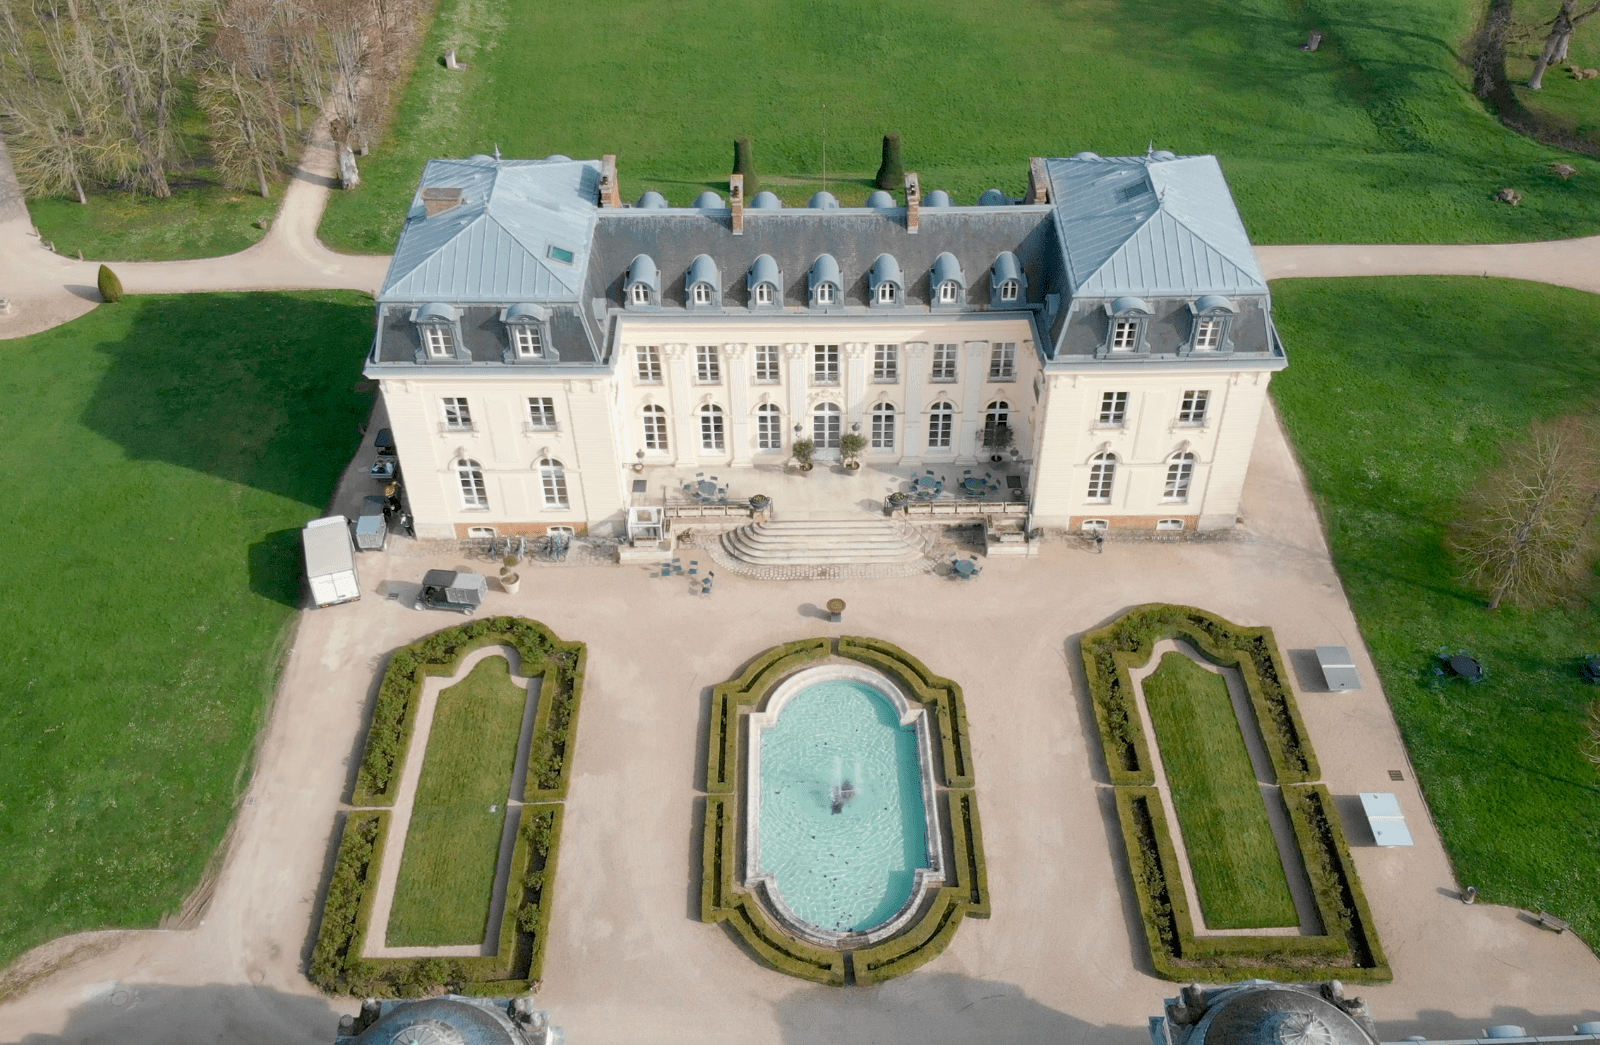 canicross et canimarche caritatif au profit de la Spa d'Hermeray au château de Béhoust Yvelines (78)